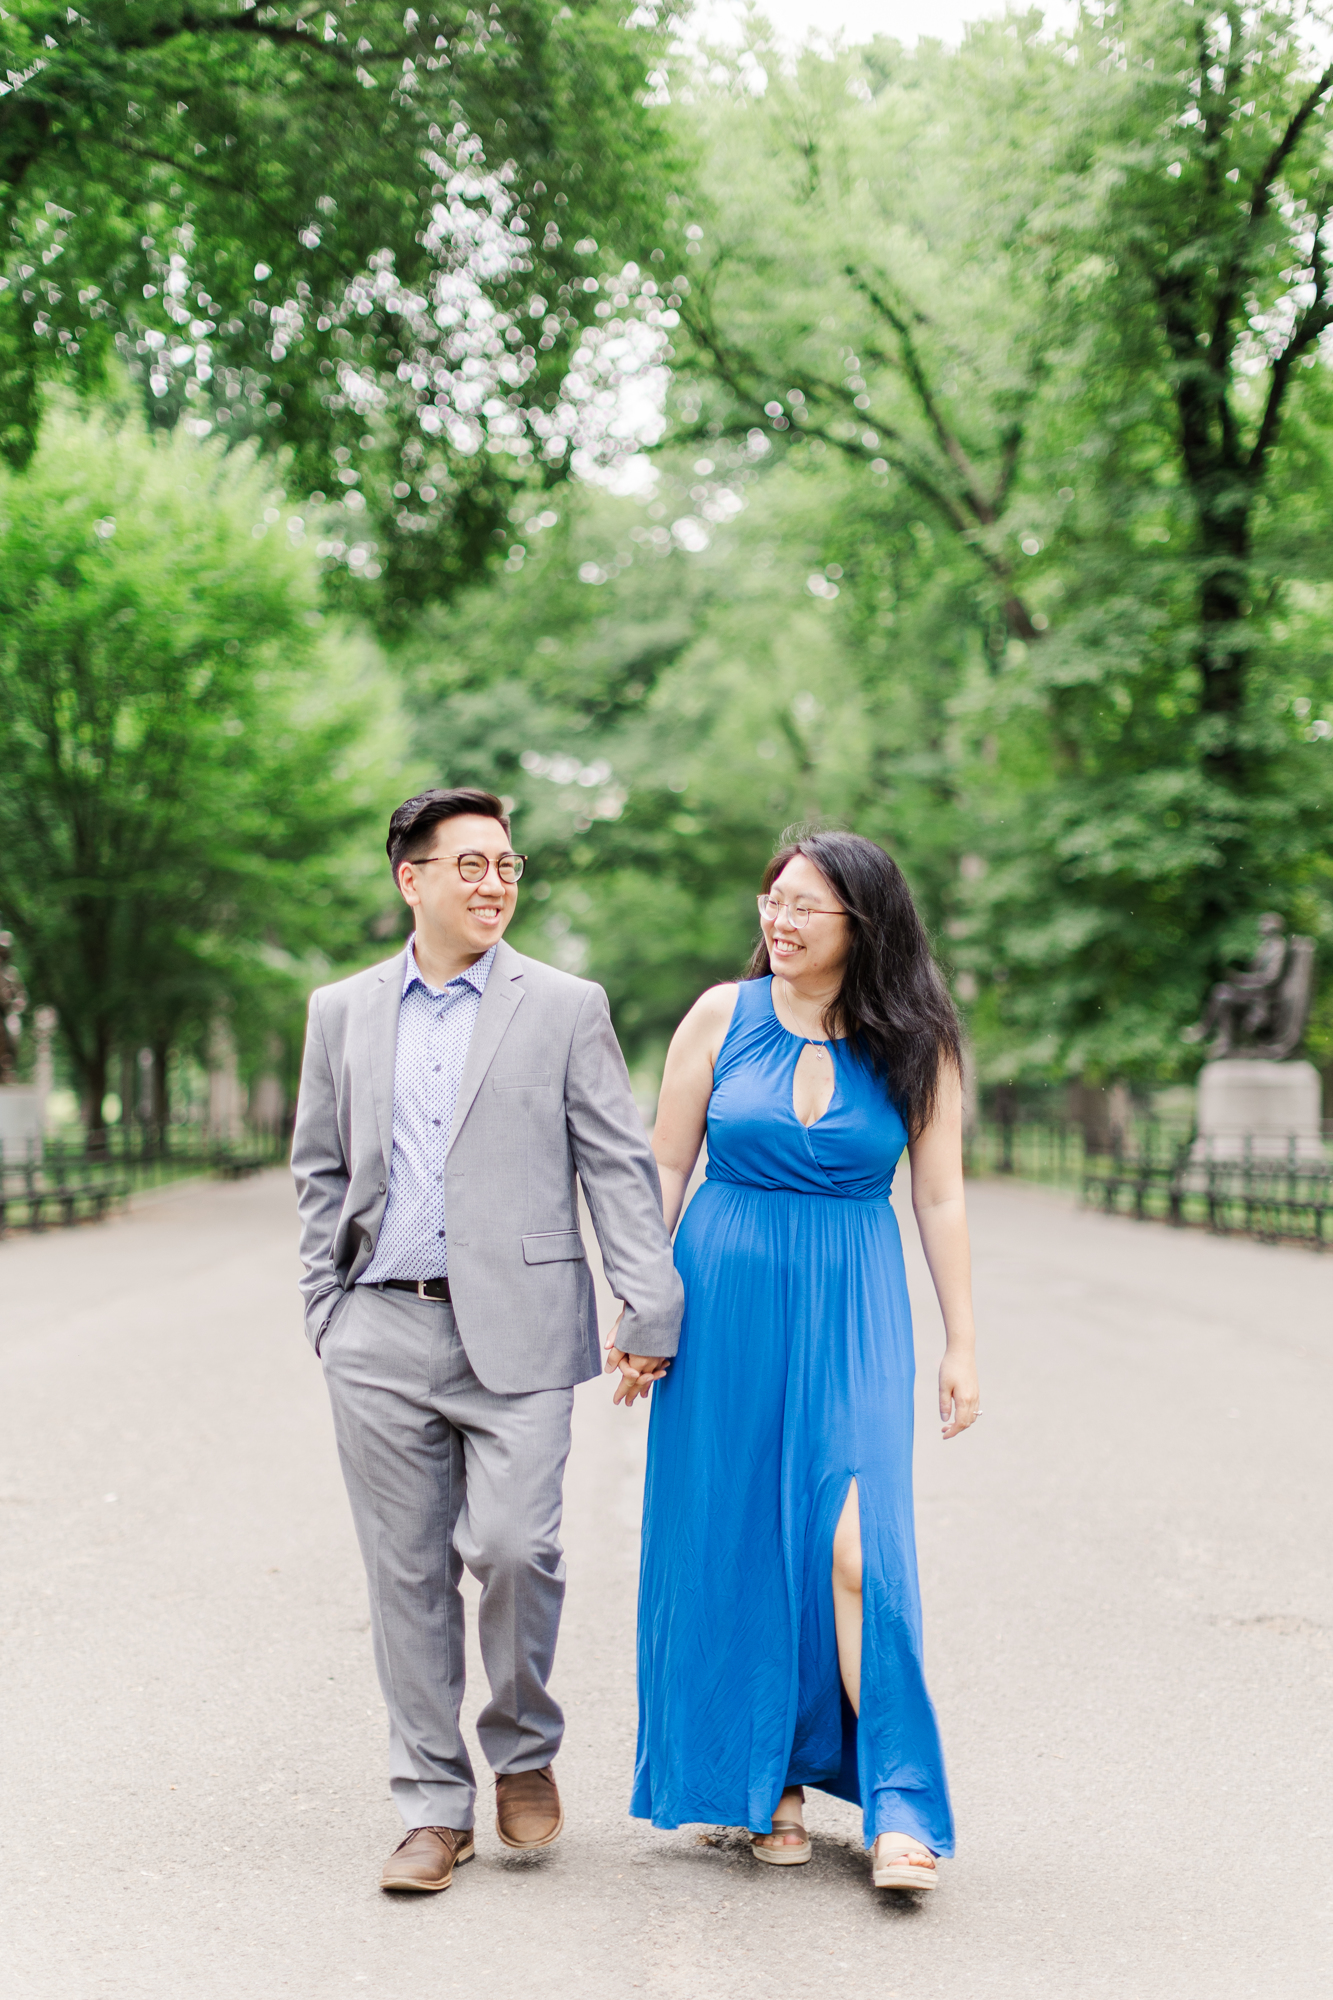 Breathtaking Central Park Engagement Pictures